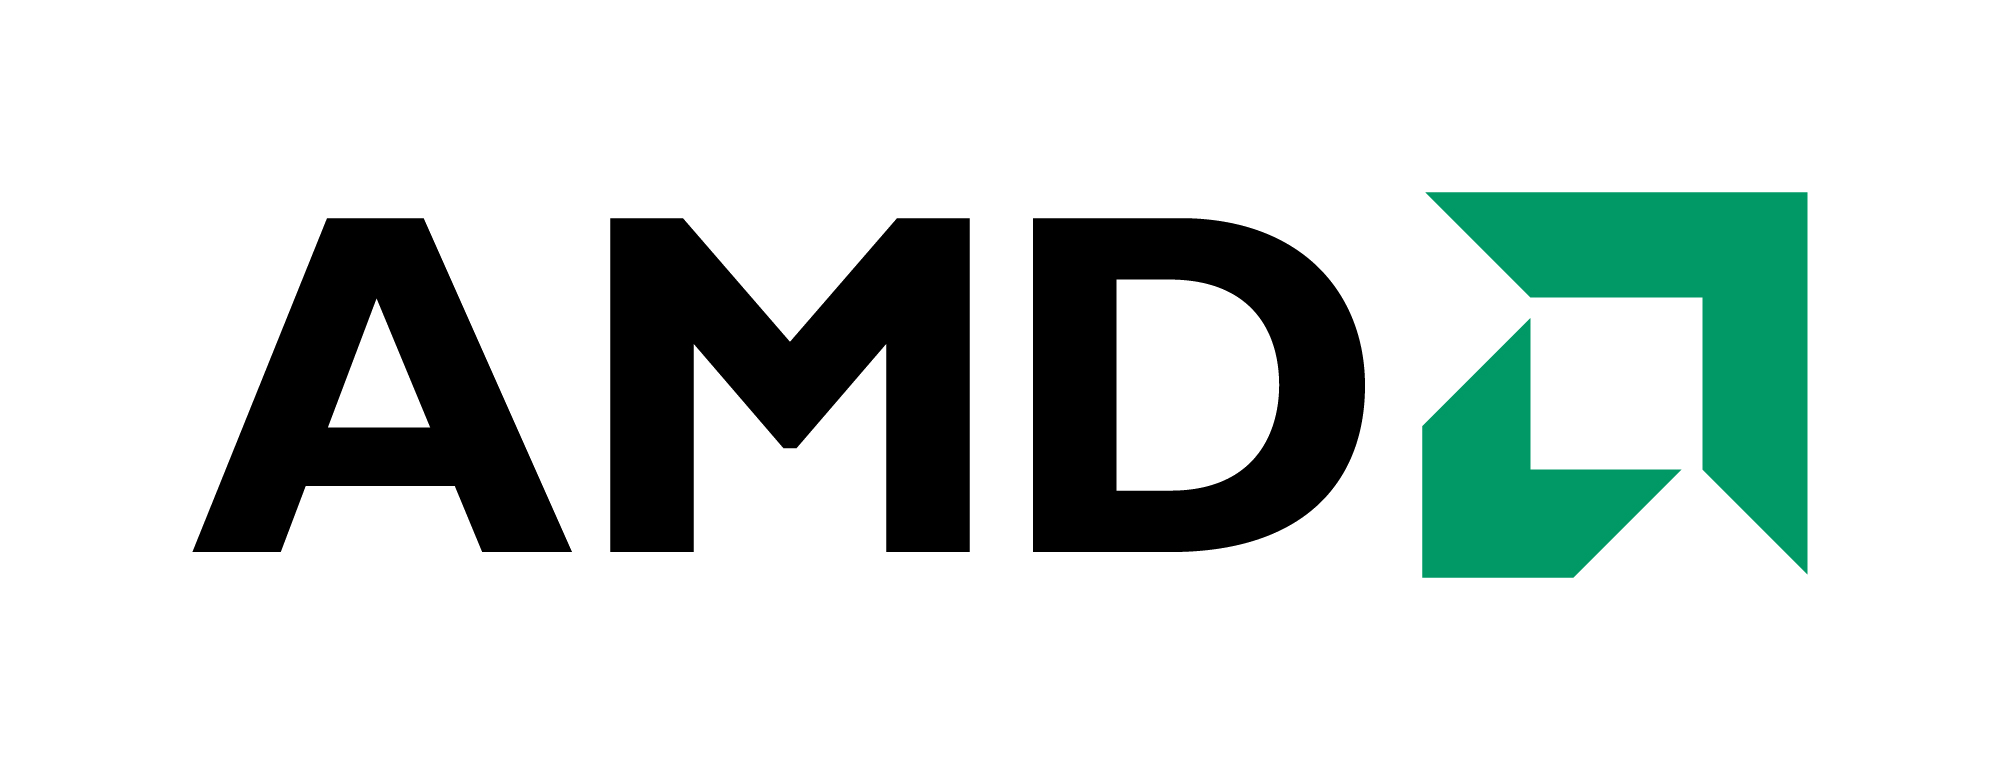 Amd-logo